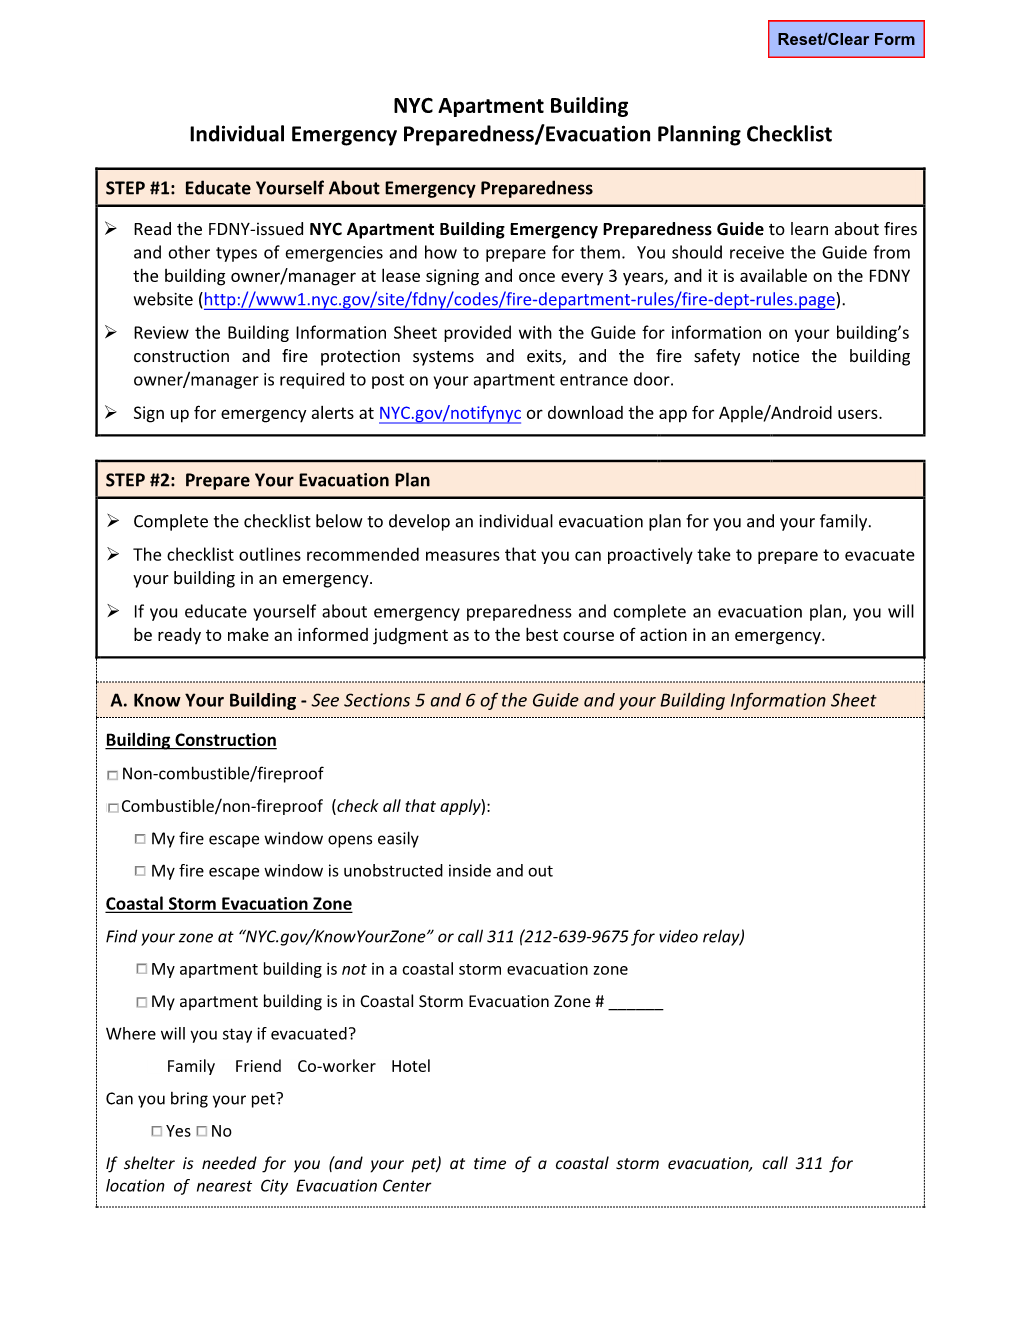 NYC Apartment Building Individual Emergency Preparedness/Evacuation Planning Checklist